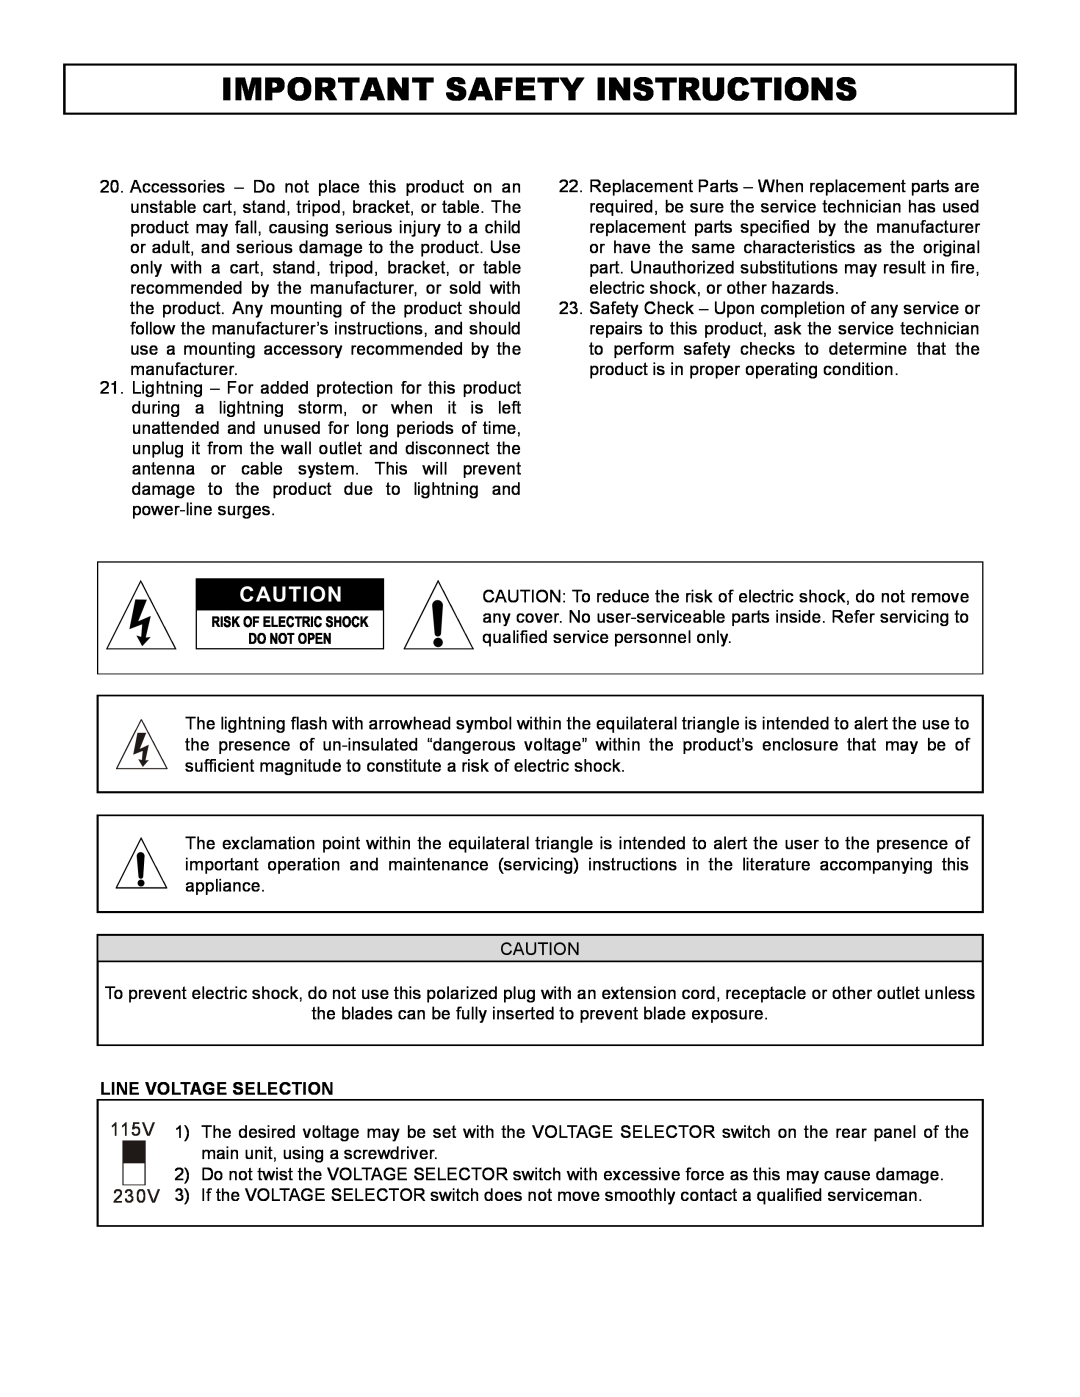 Stanton S.25O user manual Line Voltage Selection, Important Safety Instructions, 115V 